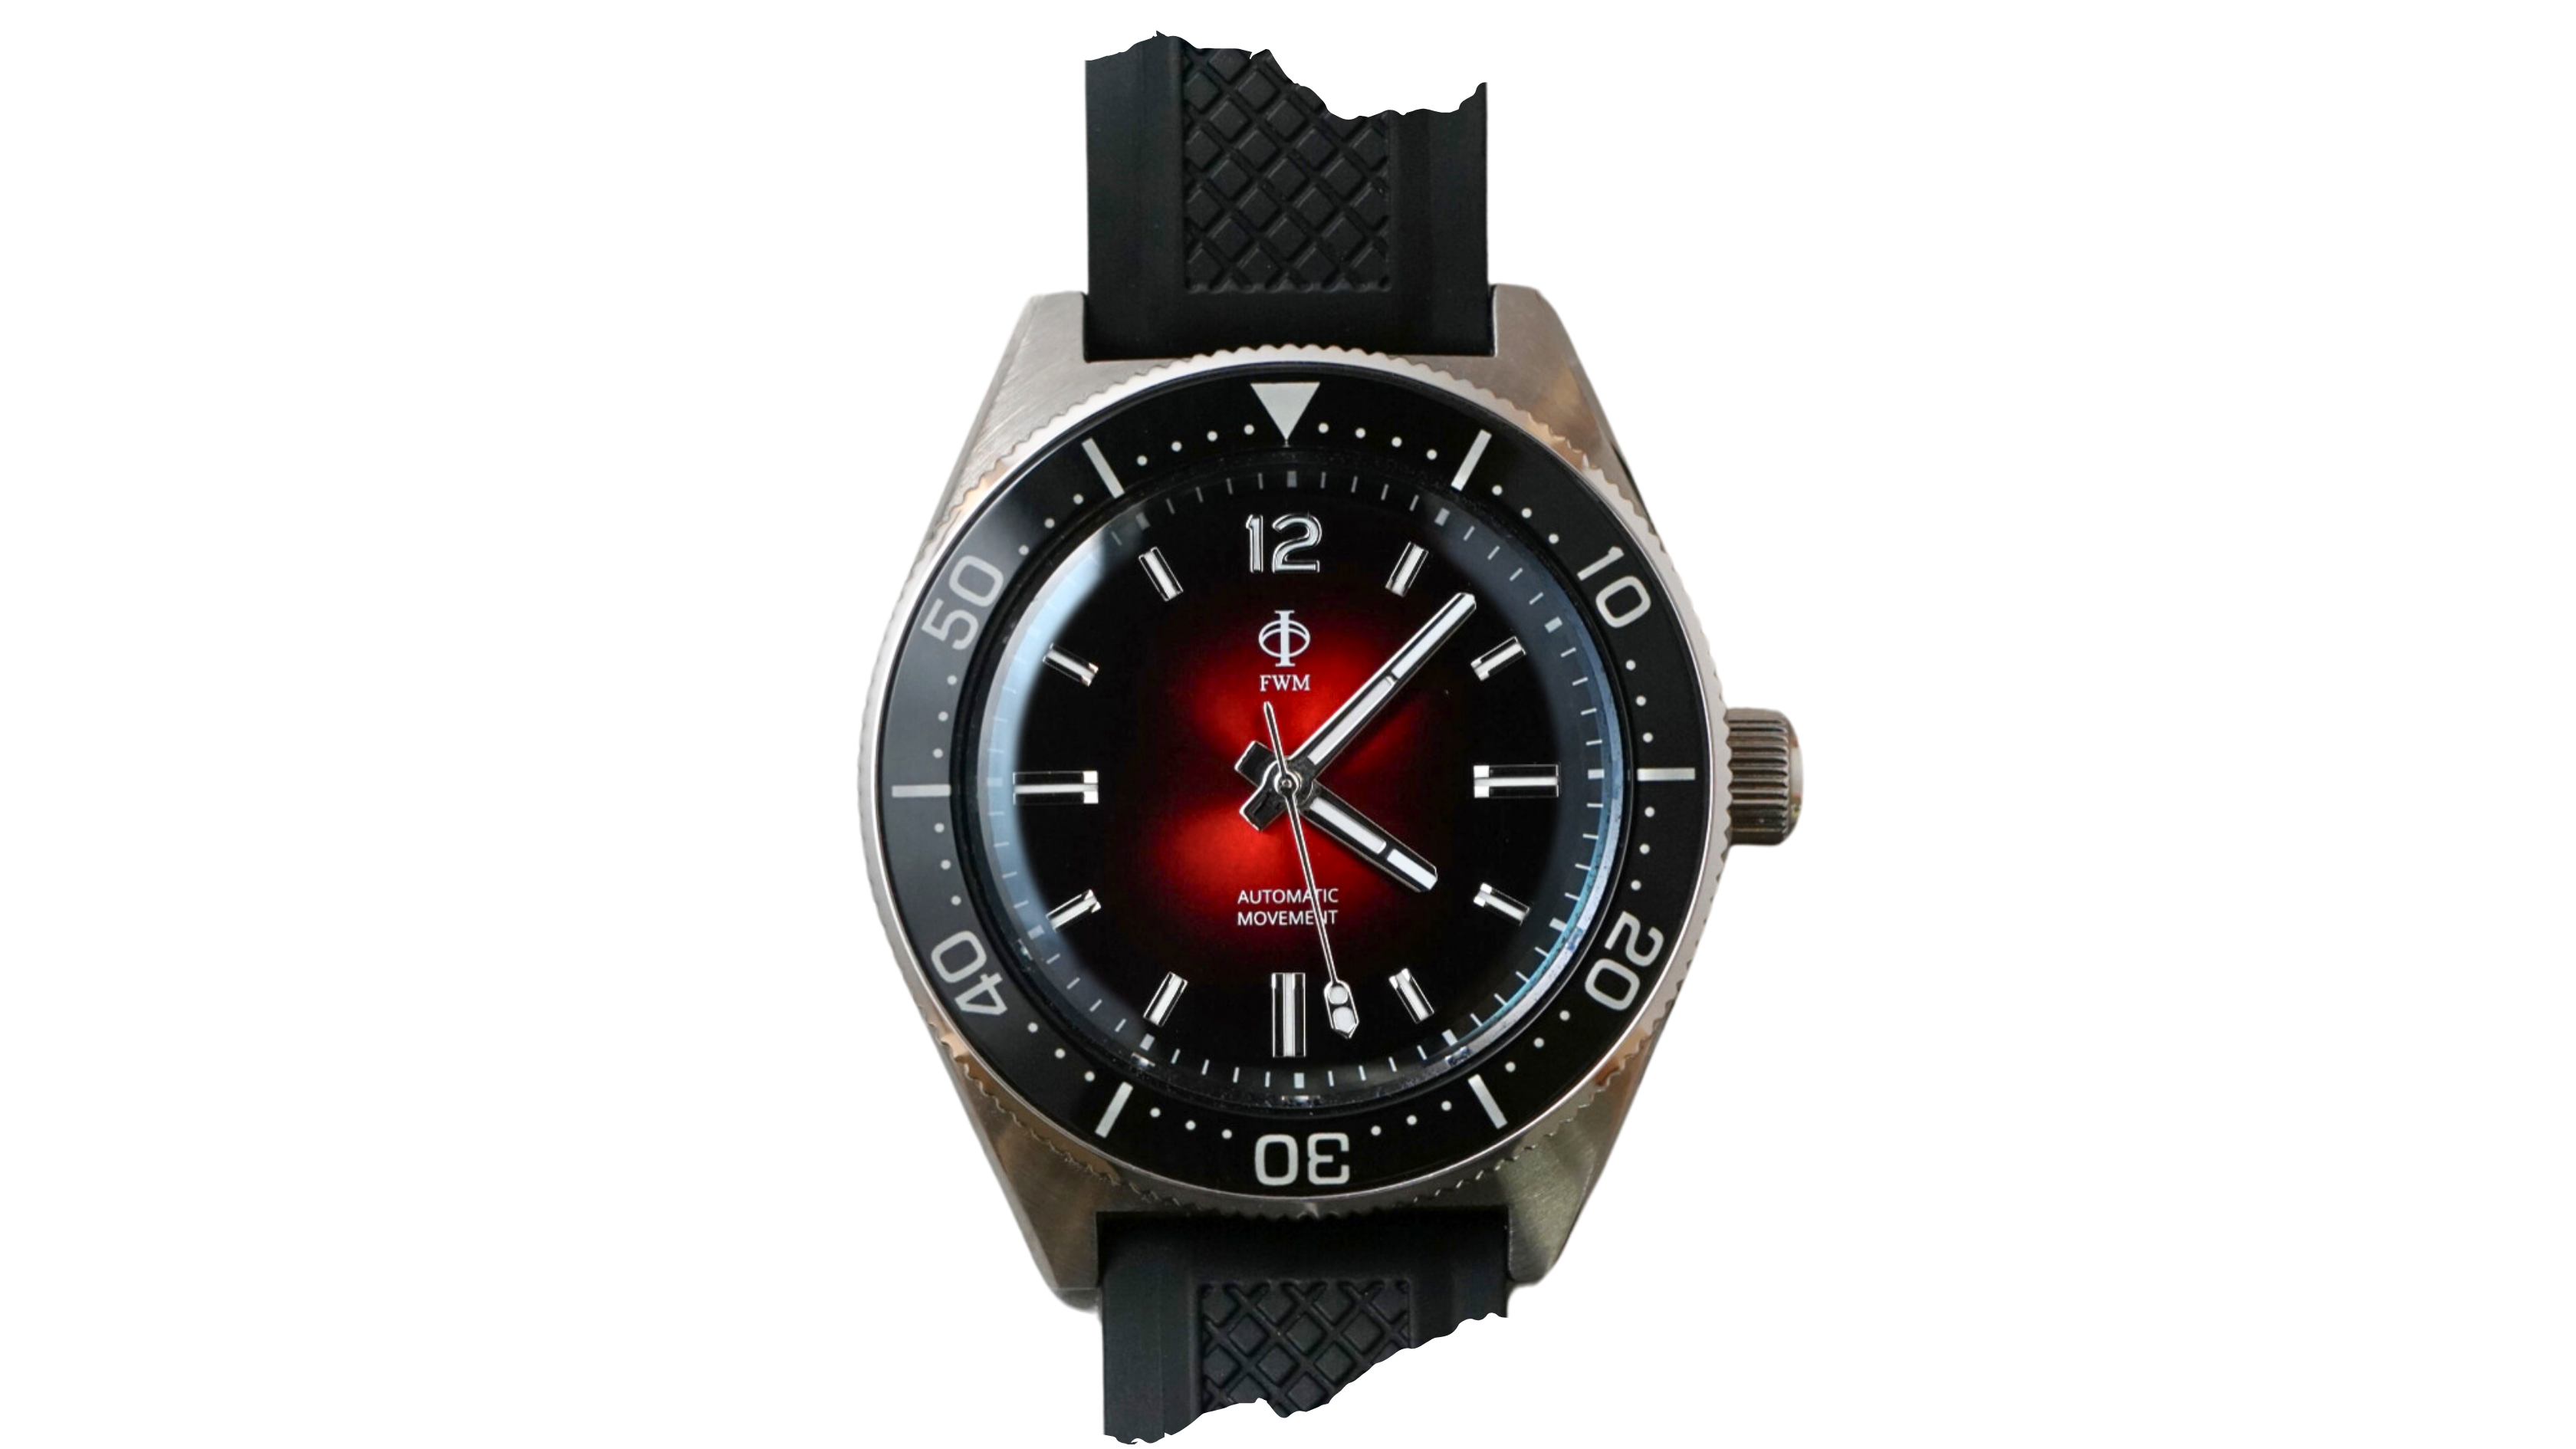 Watchmaking kit - Diver III - Ref. 23131